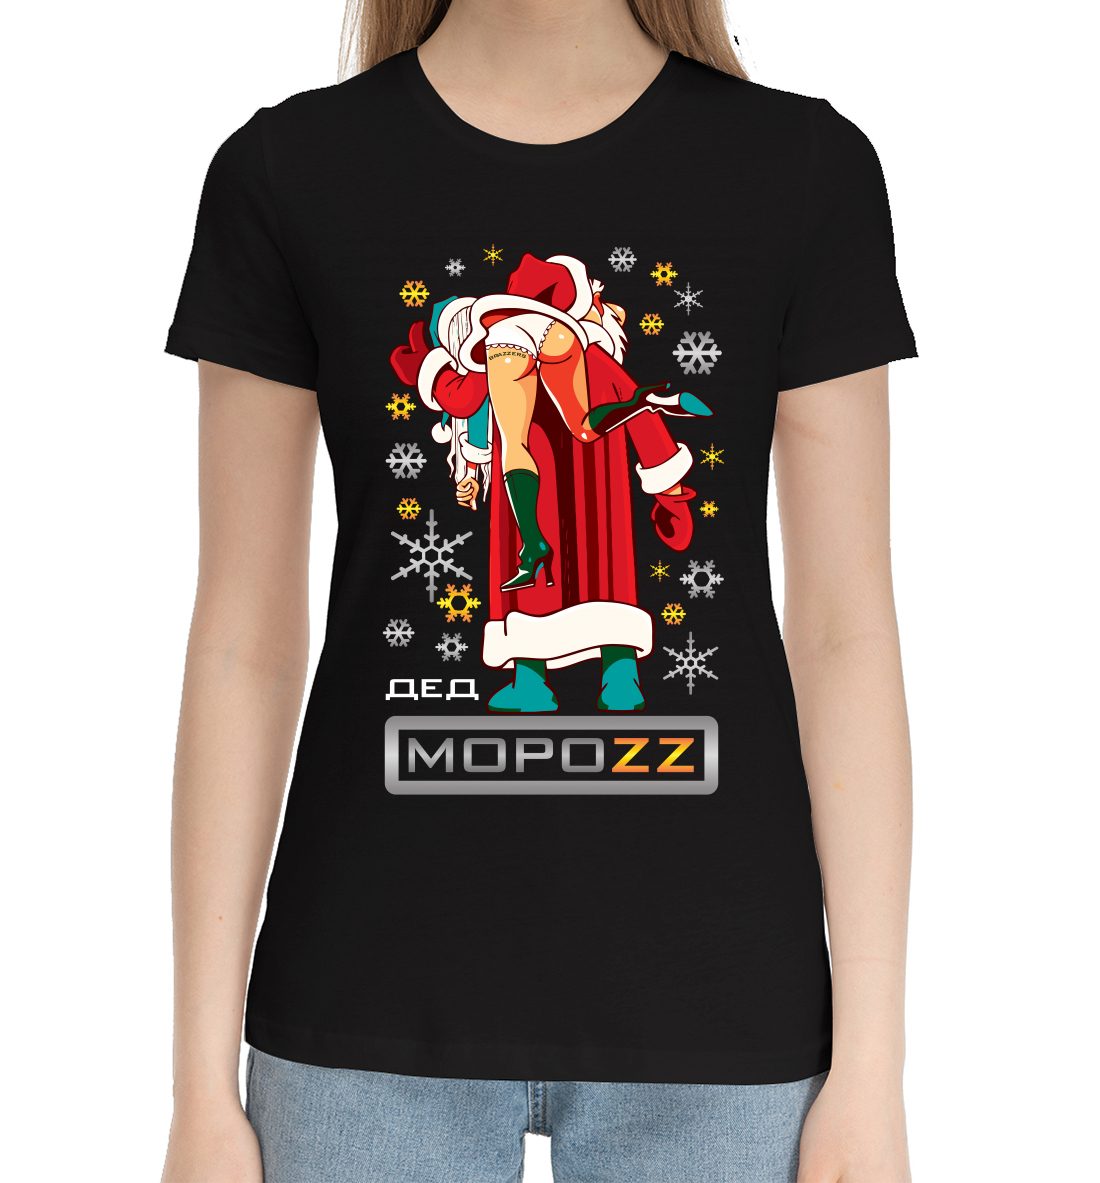 Женская Хлопковая футболка с принтом Дед Мороз Brazzers, артикул DMZ-572264-hfu-1mp